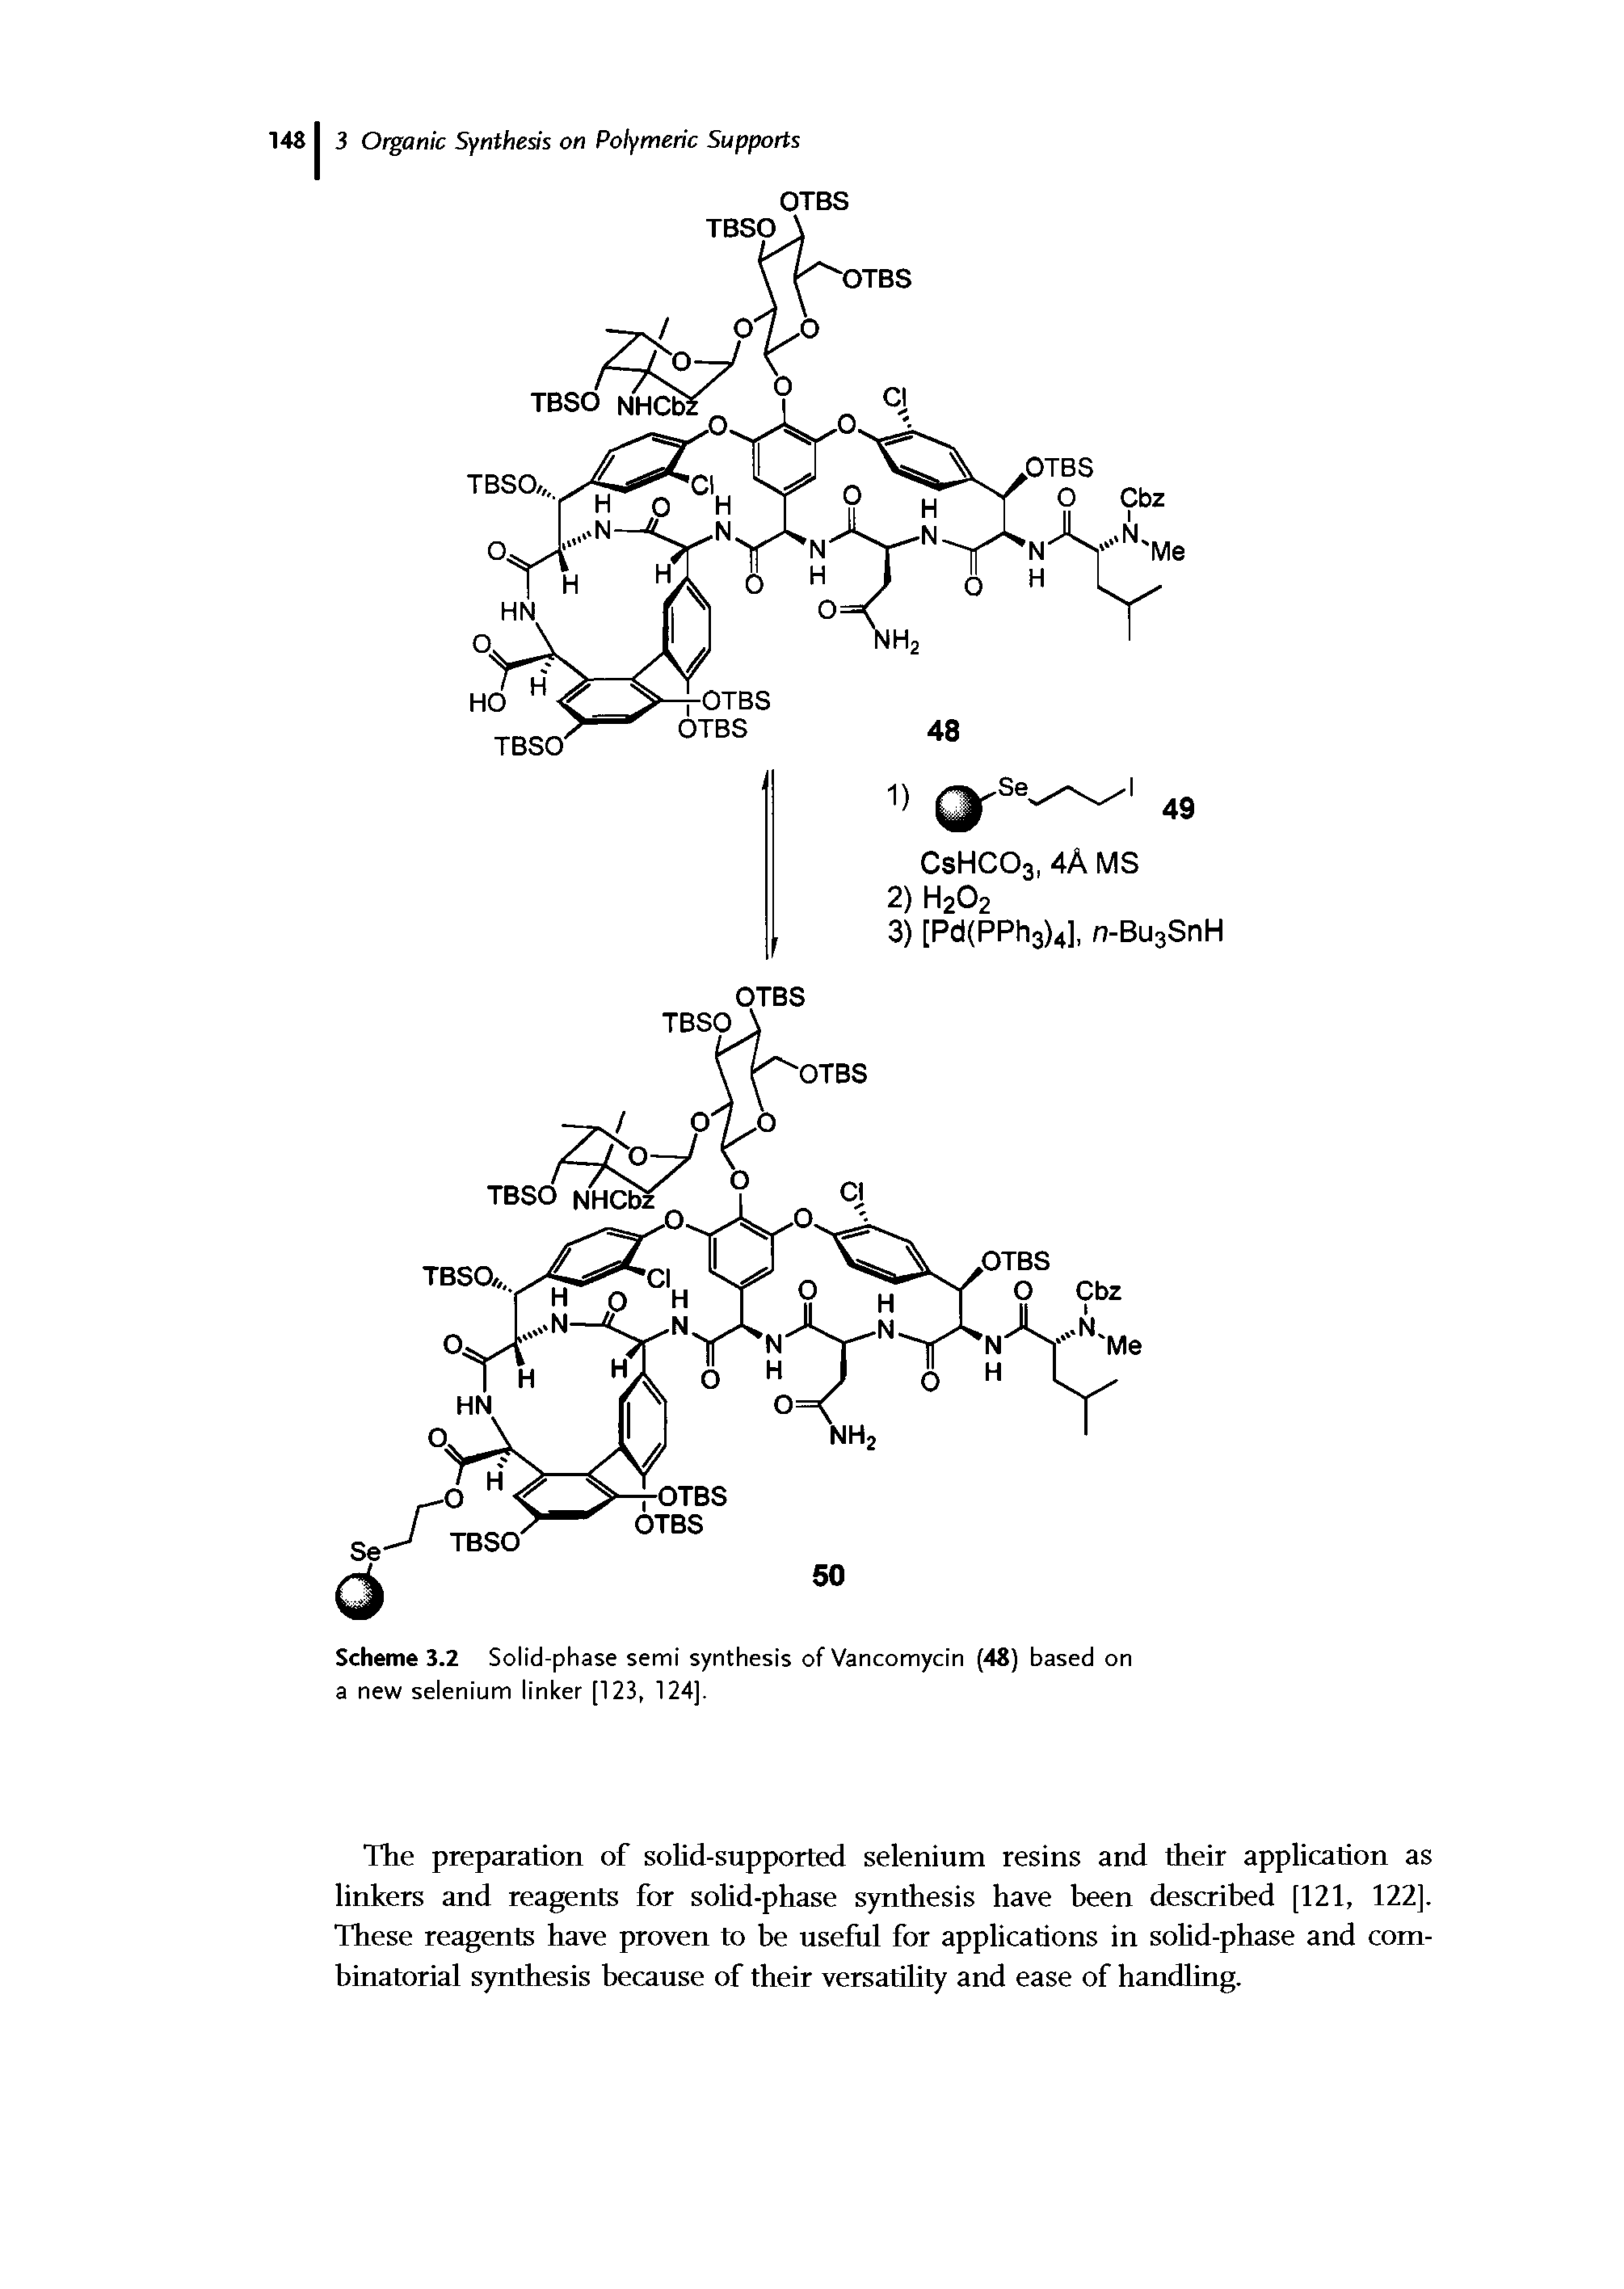 Scheme 3.2 Solid-phase semi synthesis of Vancomycin (48) based on a new selenium linker [123, 124].